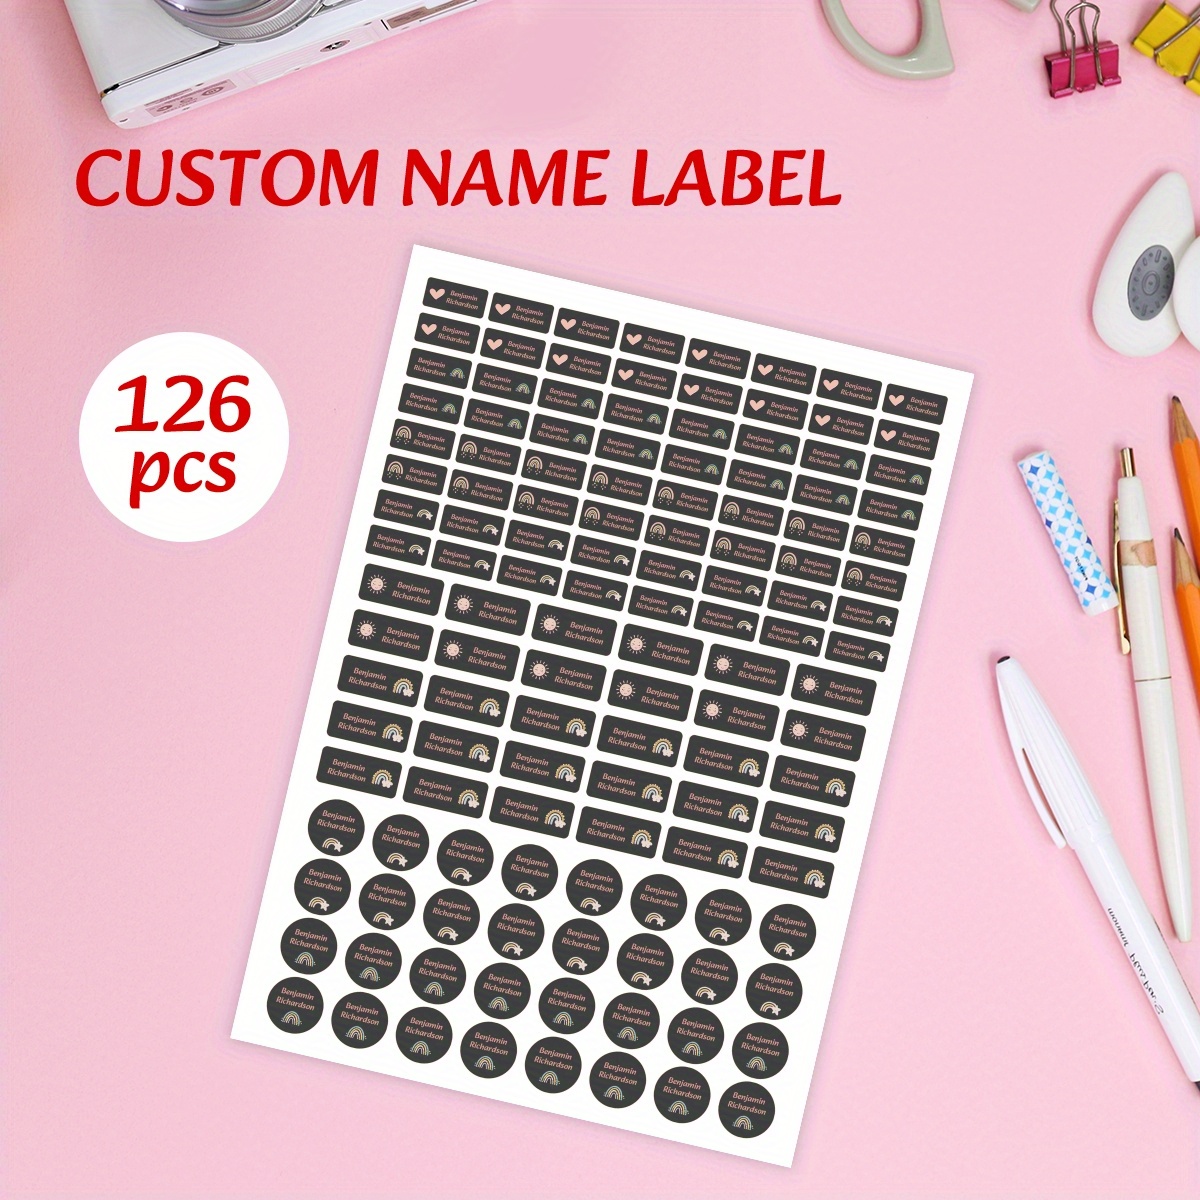 

Custom 126-piece Waterproof Name Stickers For School, Office & Water Bottles - Durable Pp Material